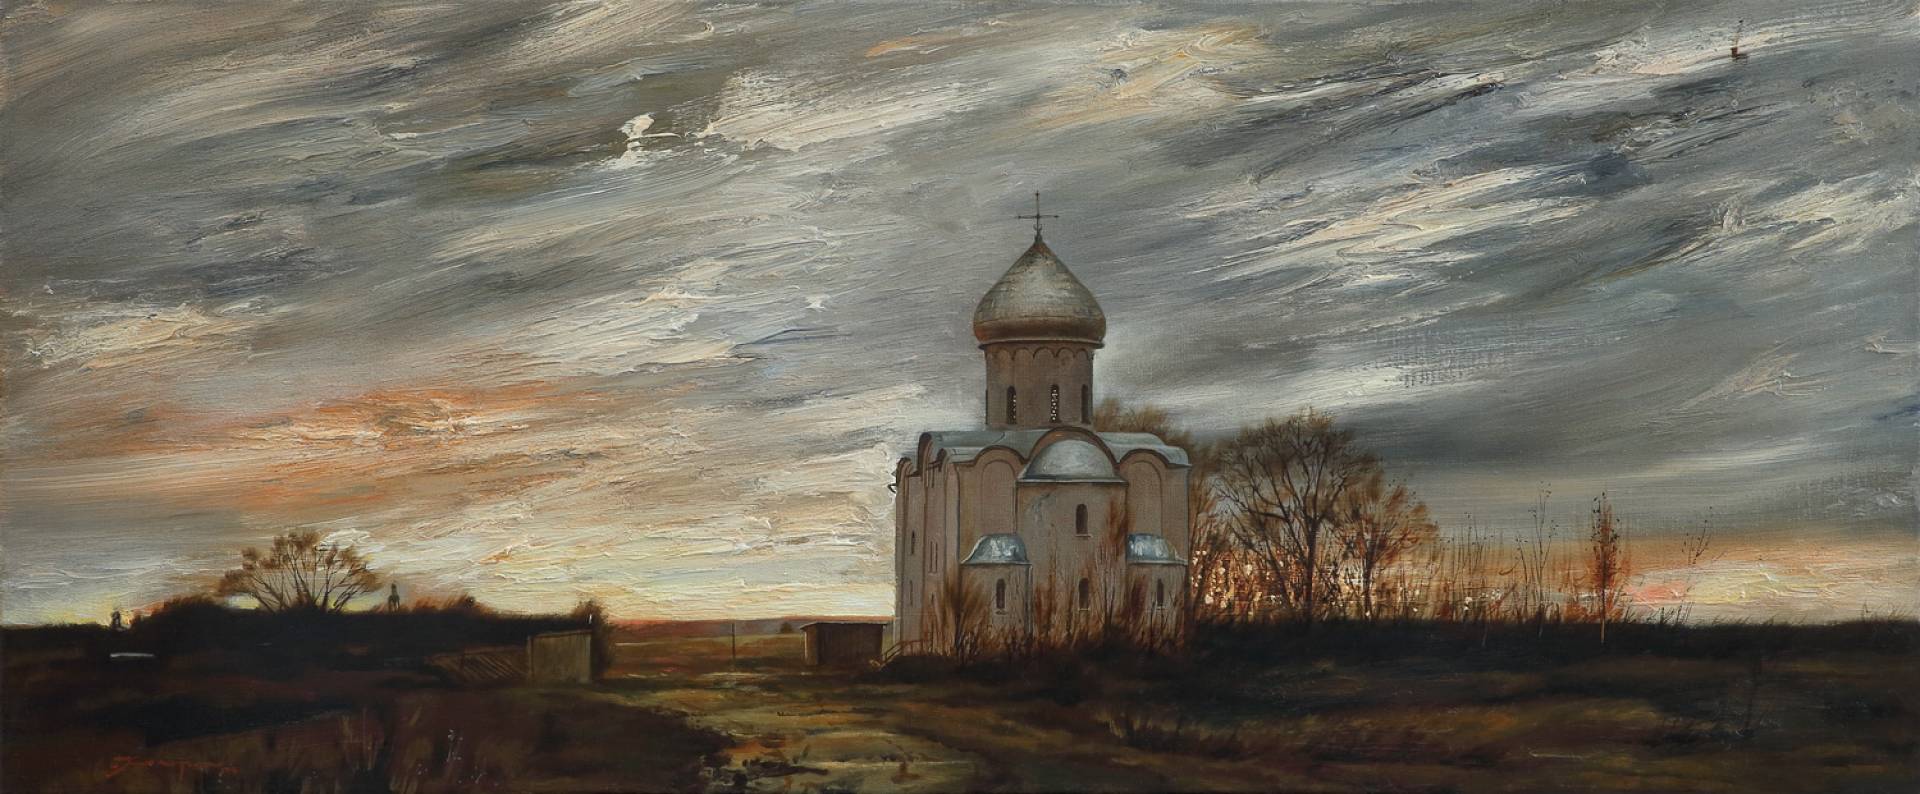 Sunset in Novgorod, Ilya Khokhrin, Buy the painting Oil